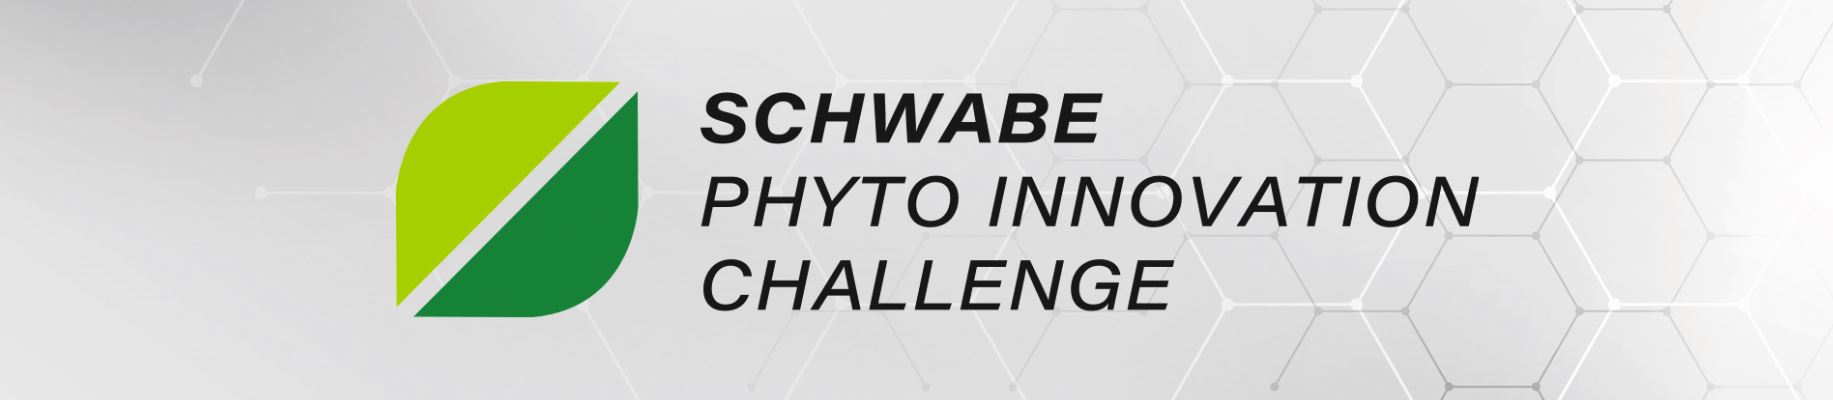 Schwabe Phyto Innovation Challenge Header